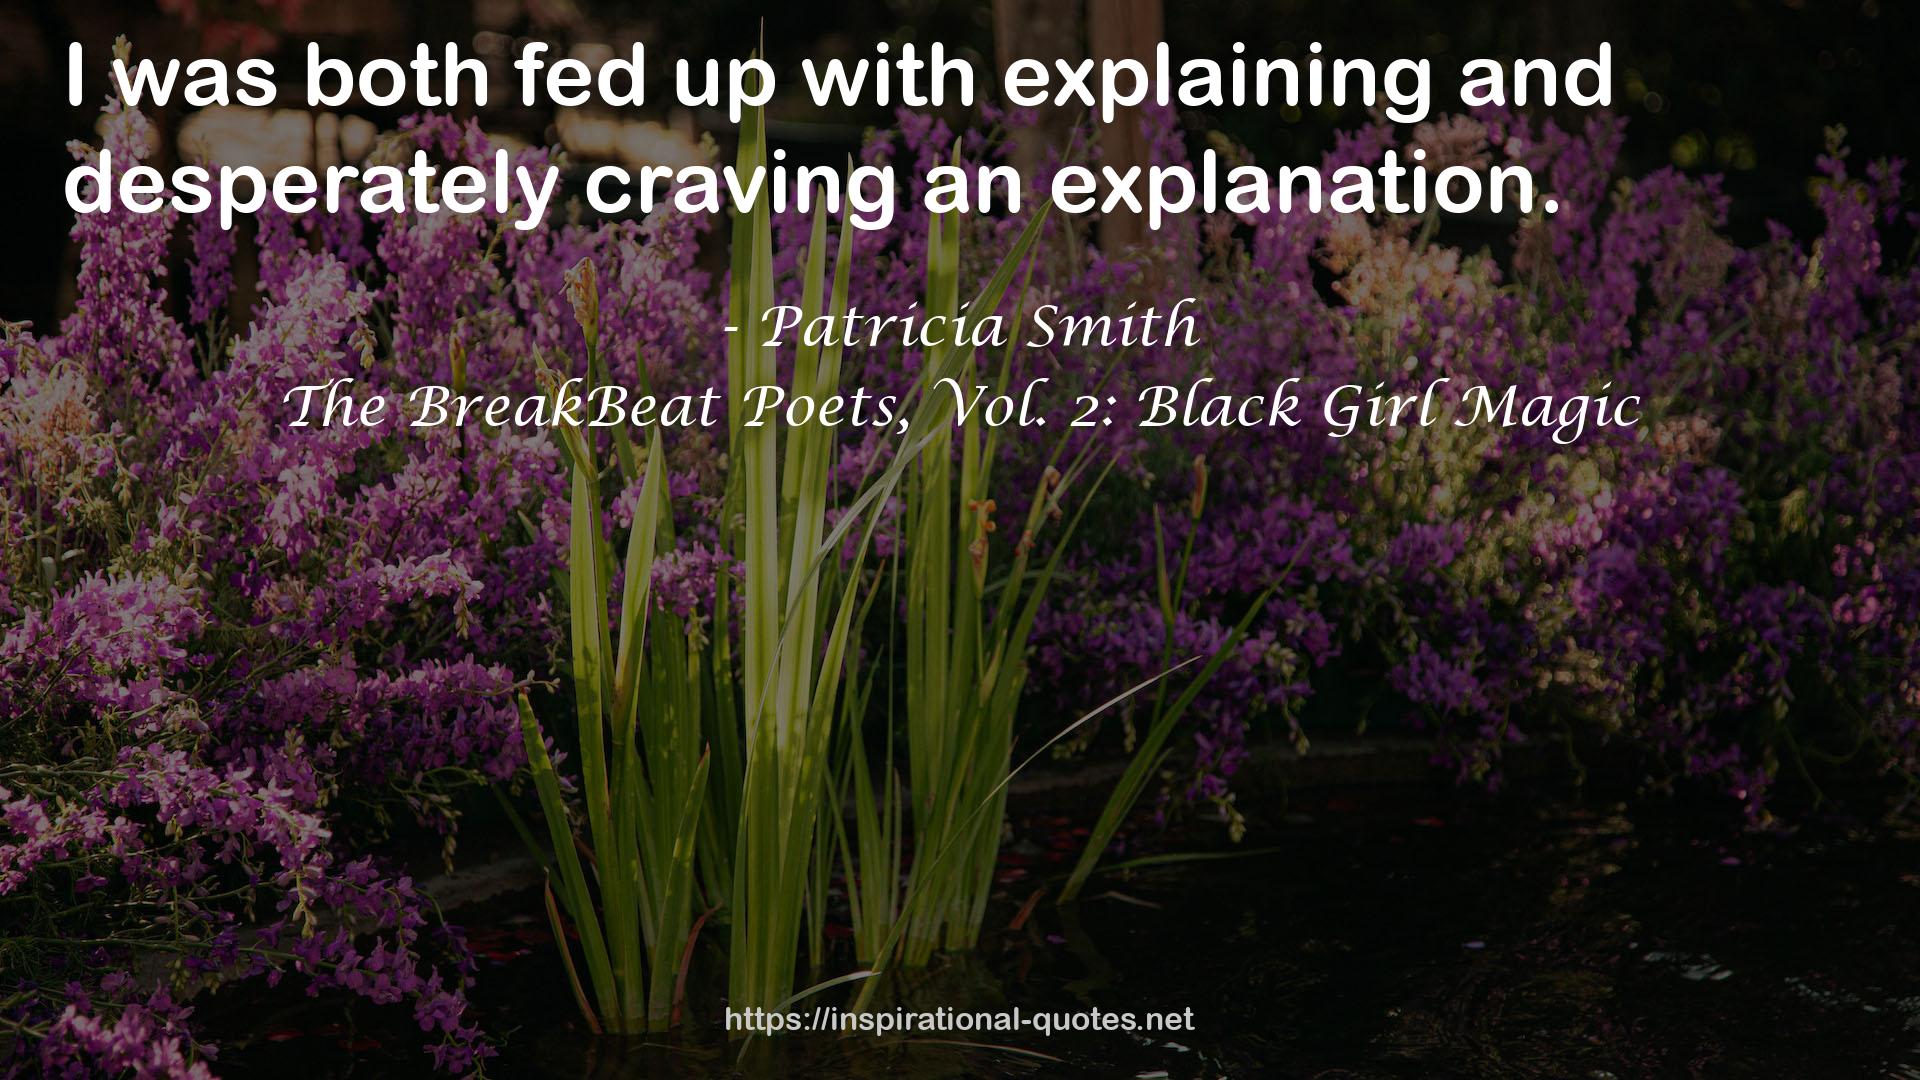 The BreakBeat Poets, Vol. 2: Black Girl Magic QUOTES